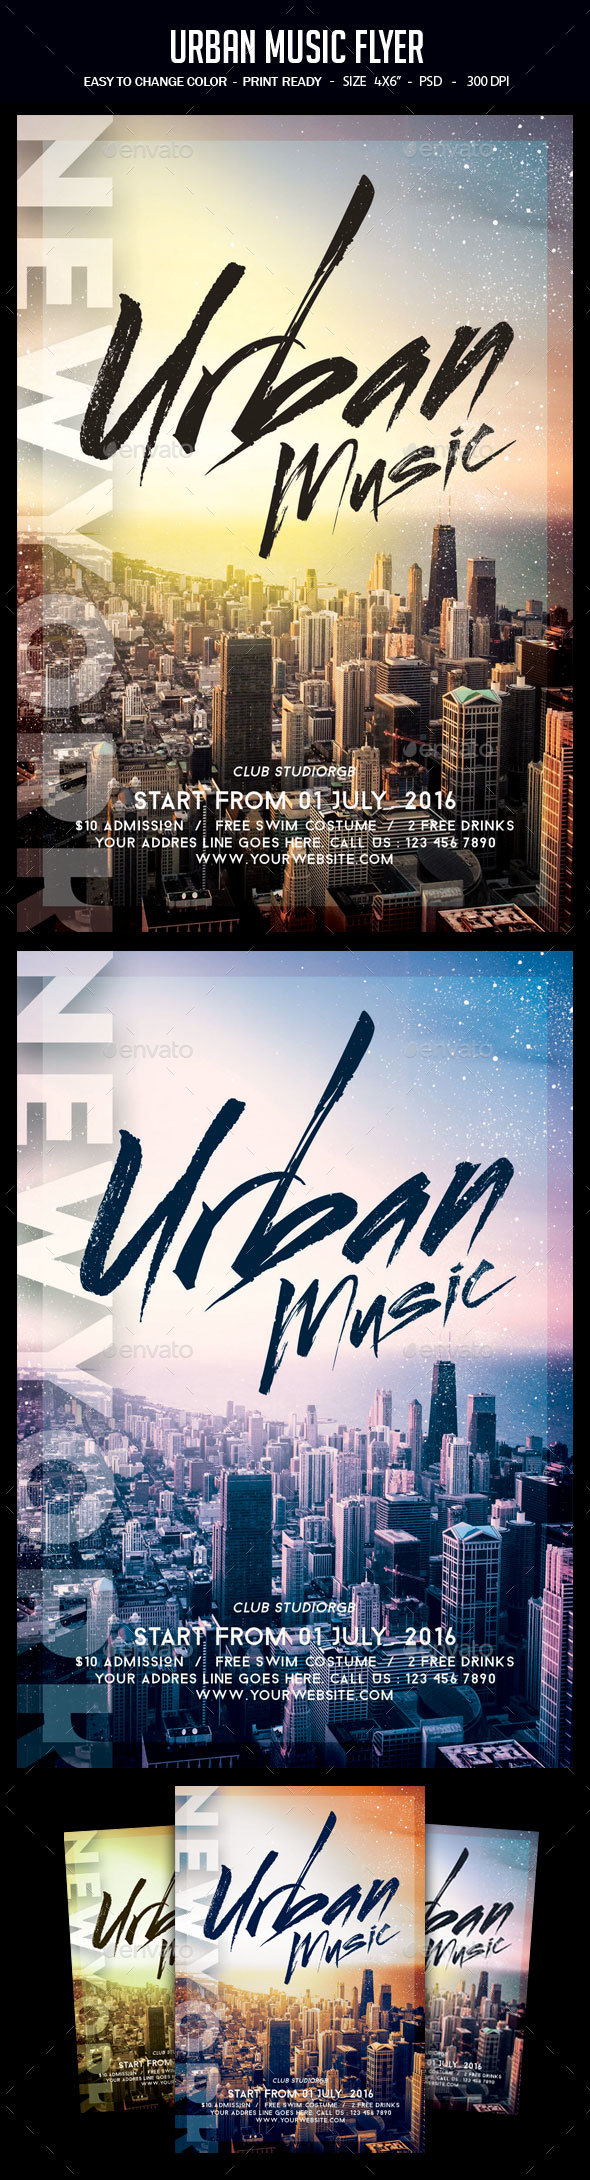 Urban Music Flyer